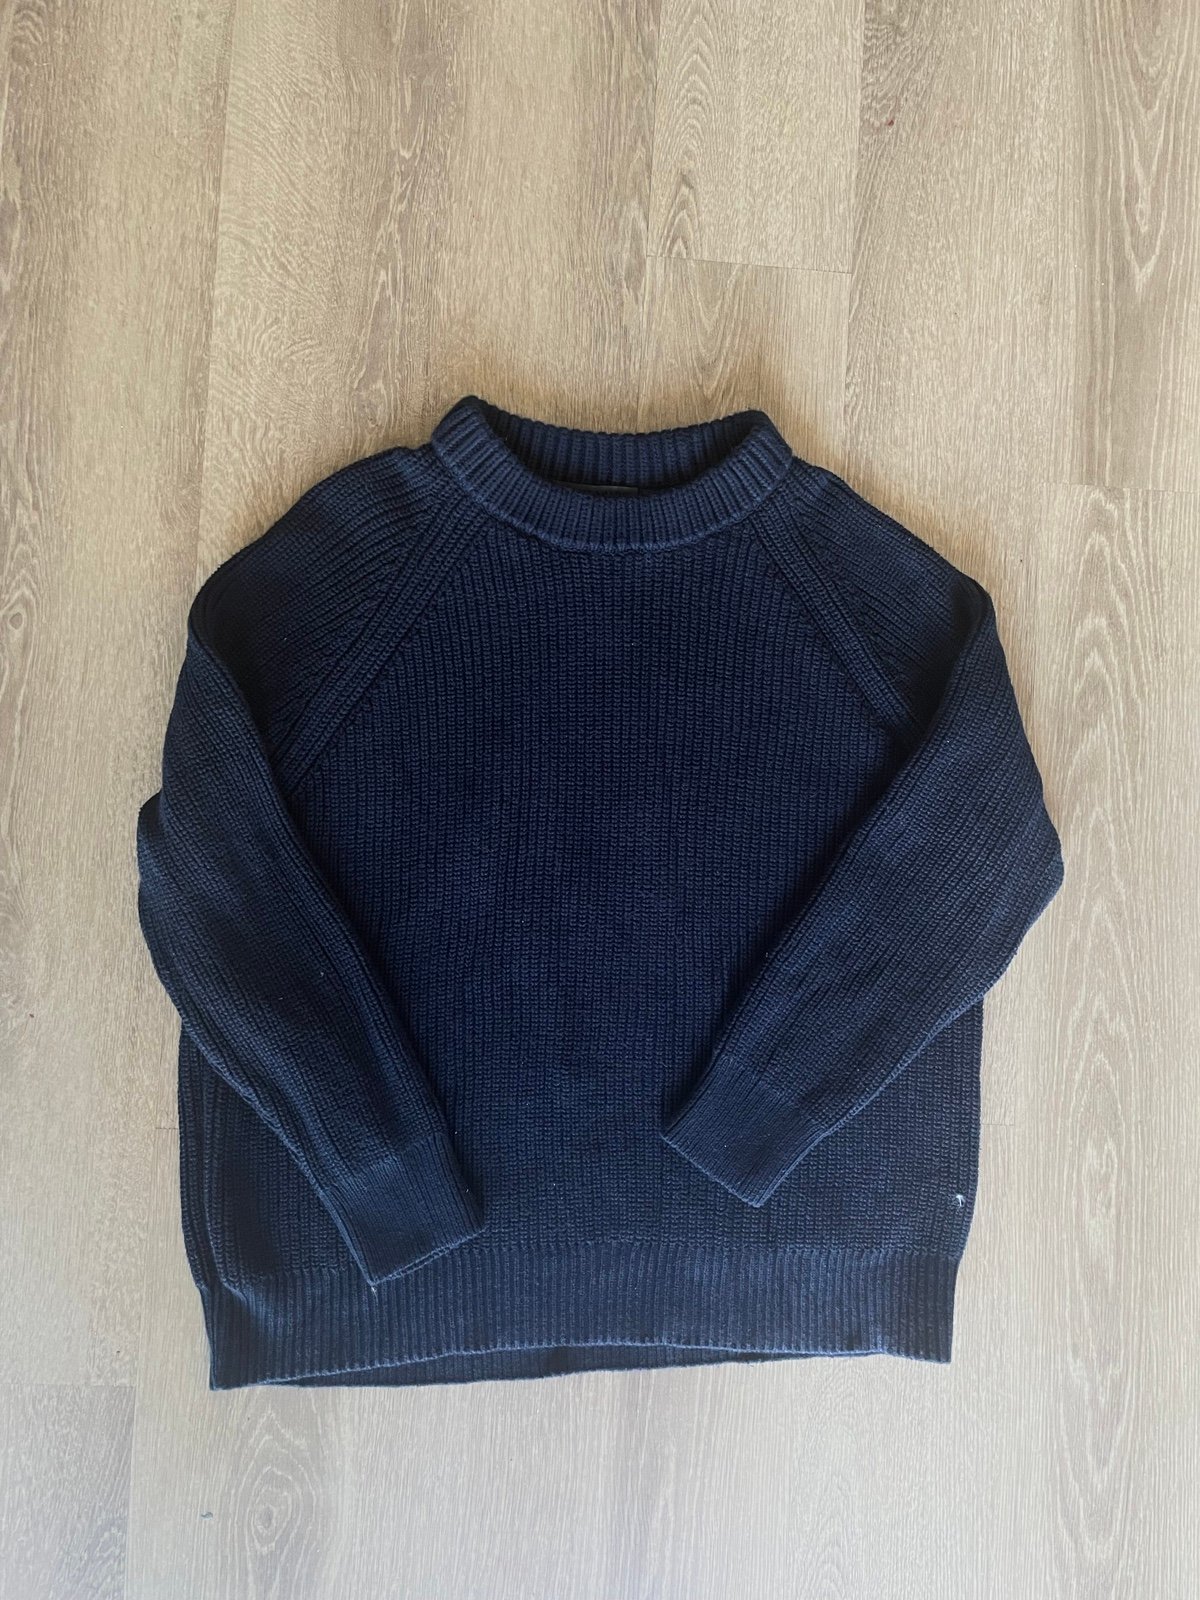 Perfect Sweater GIdyaCpYp Cheap